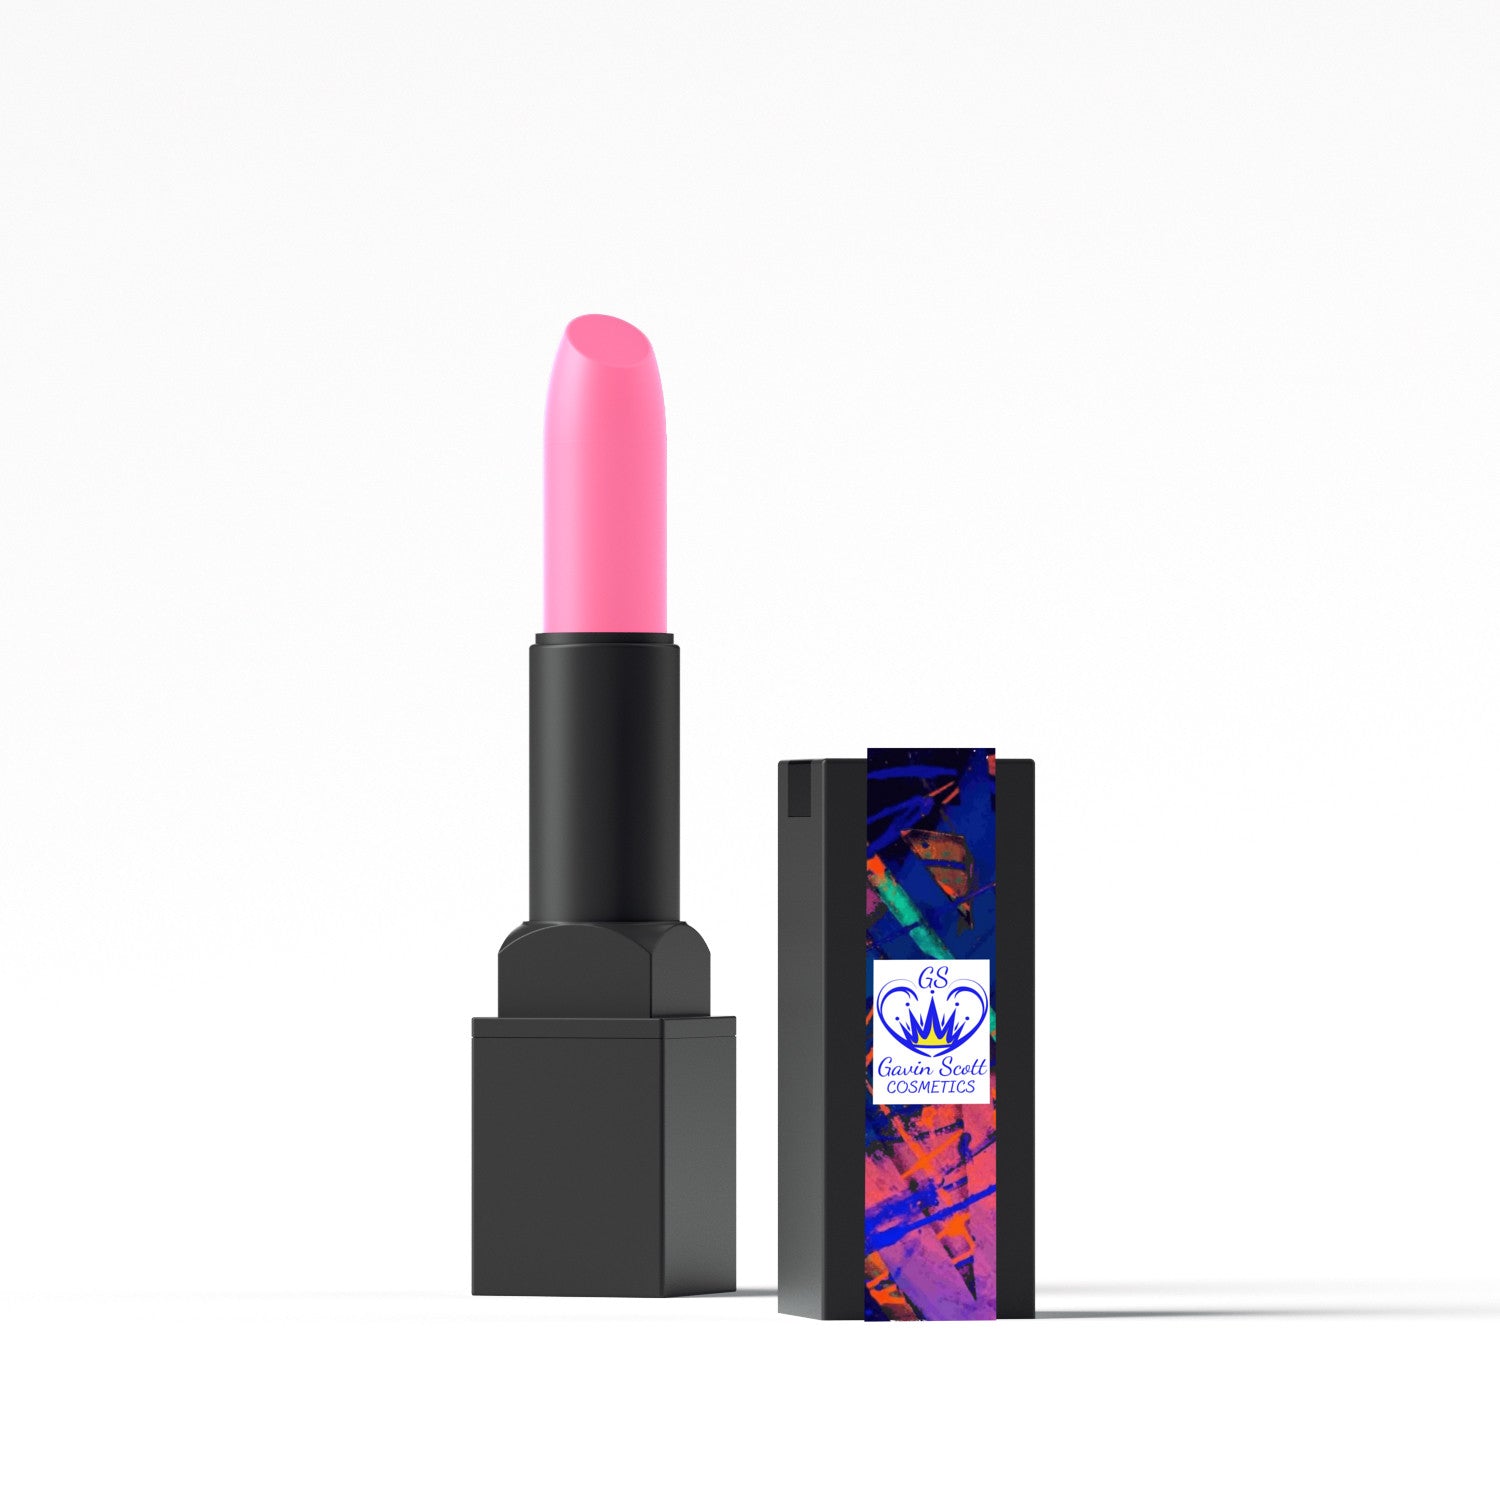 Lipstick-8109